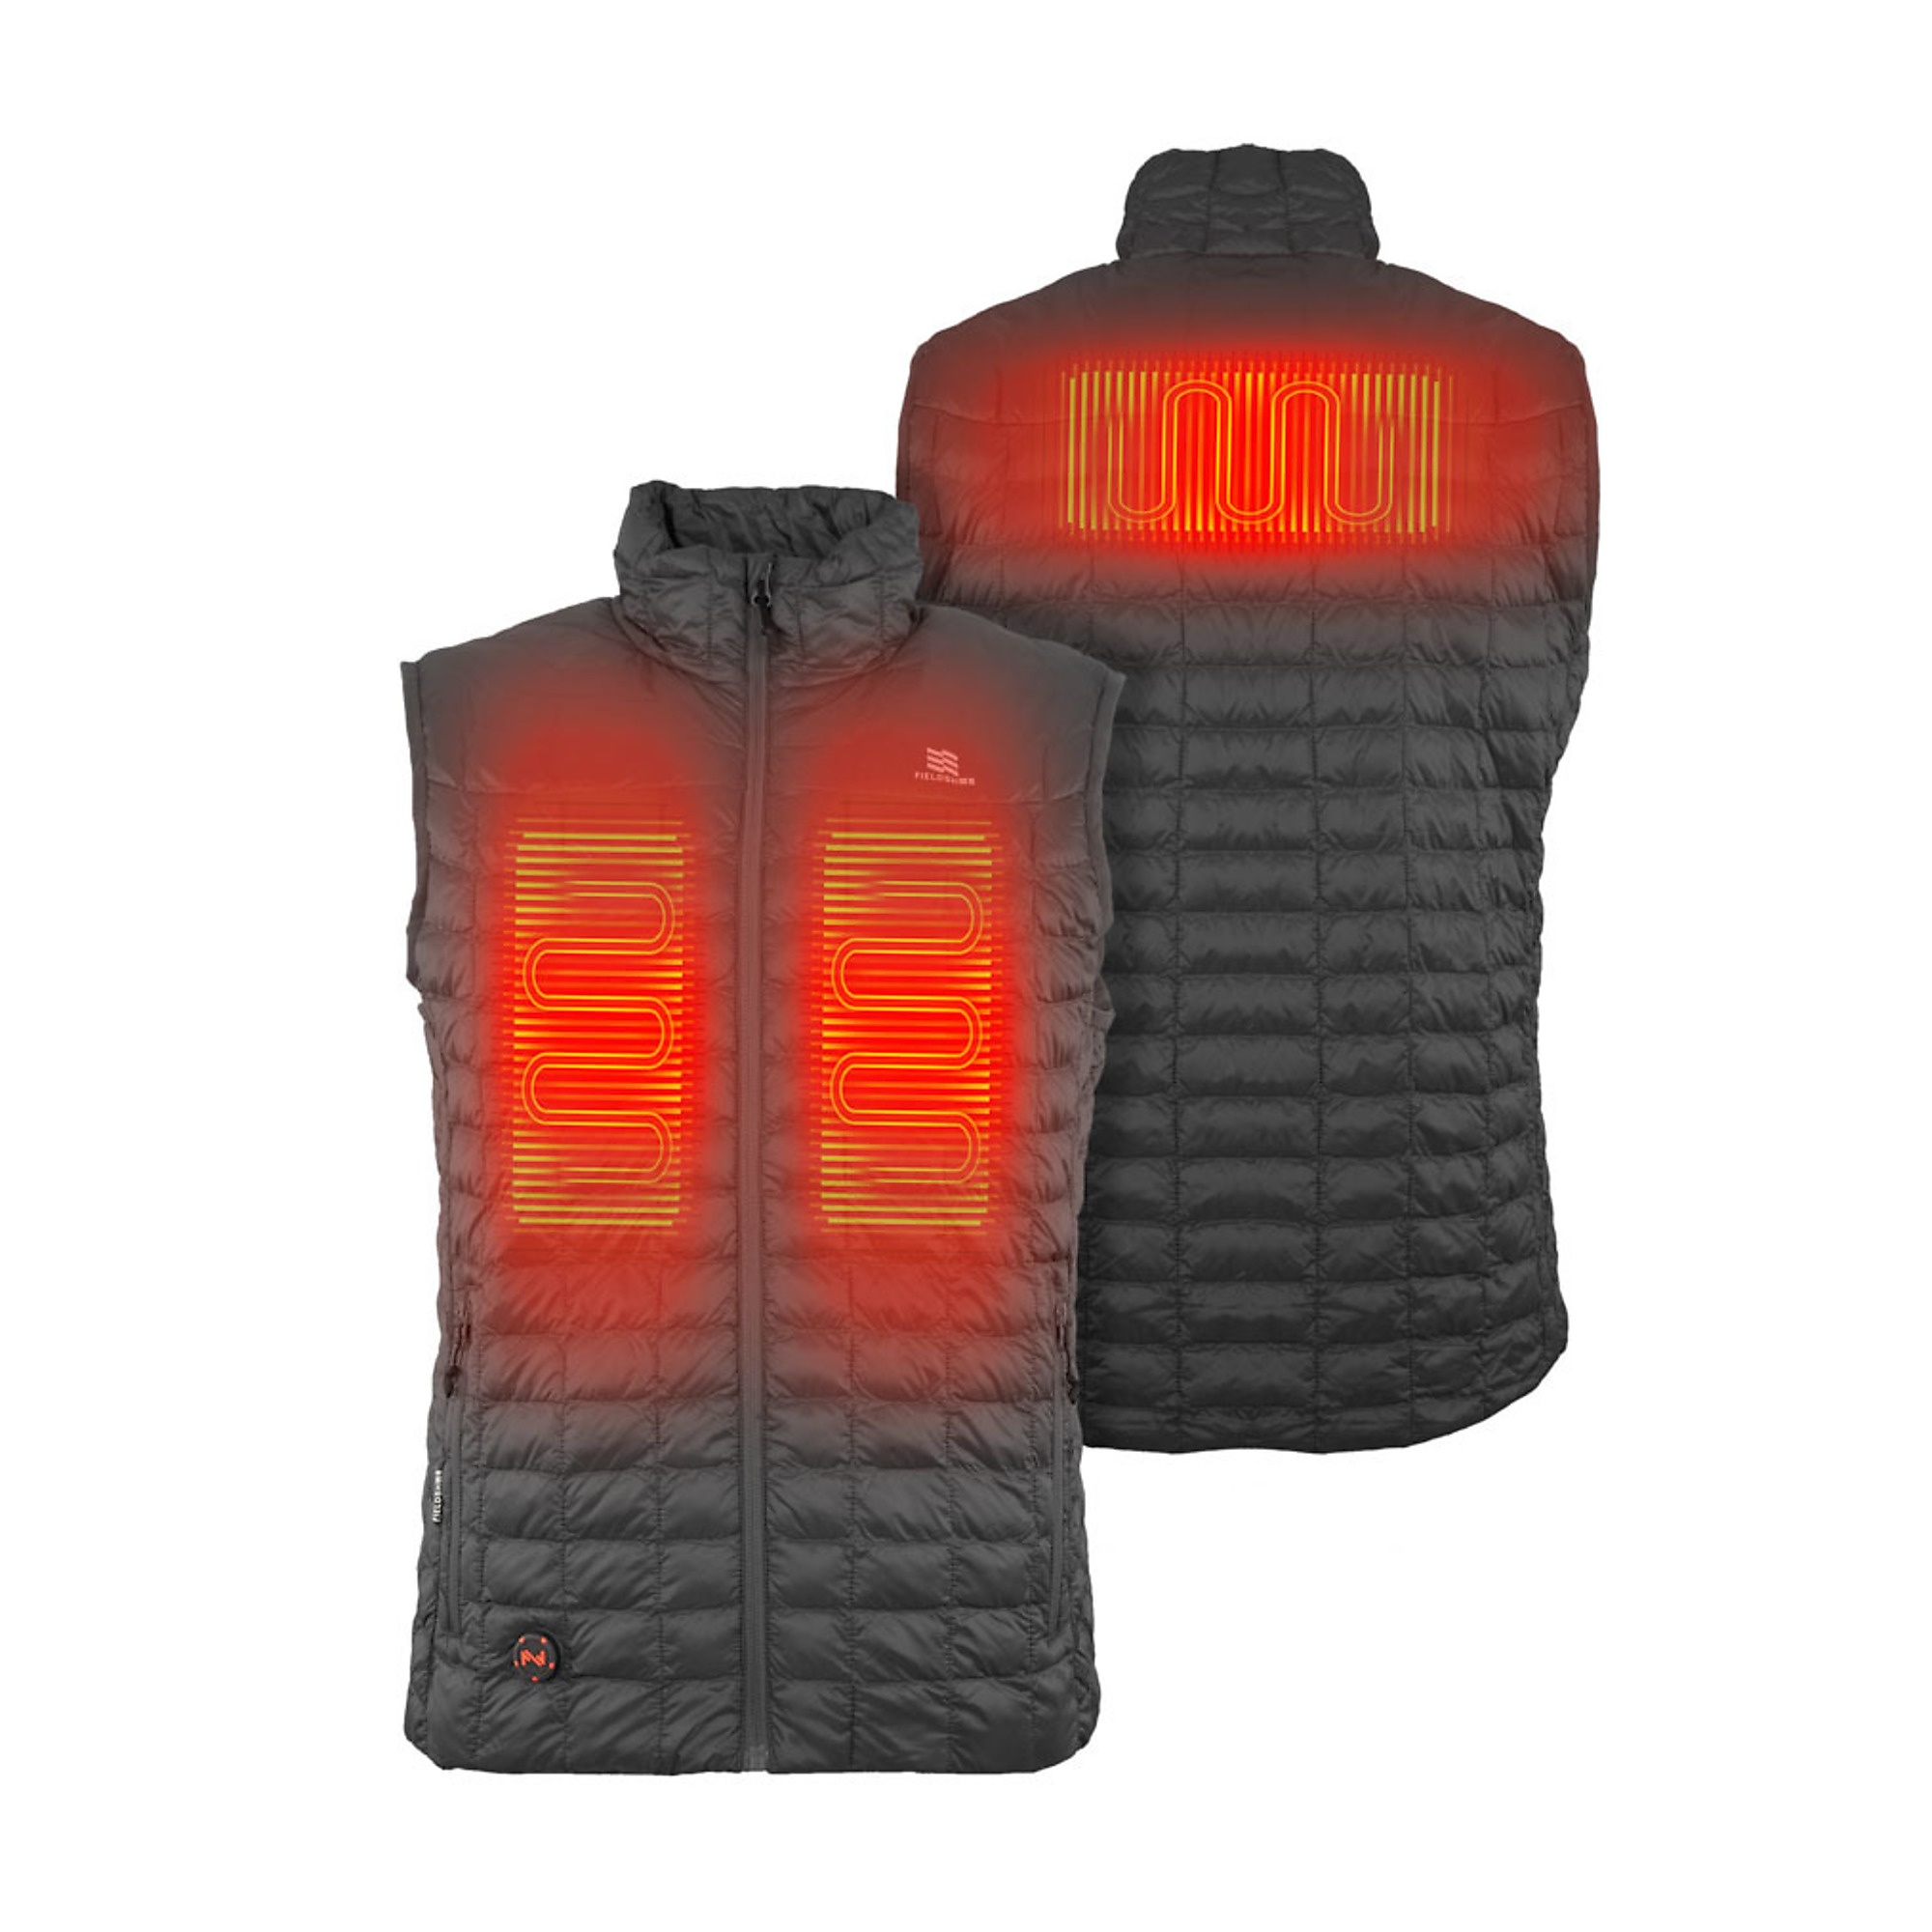 Fieldsheer, Men's Backcountry Heated Vest with 7.4v Battery, Size 3XL, Color Black, Model MWMV04010720